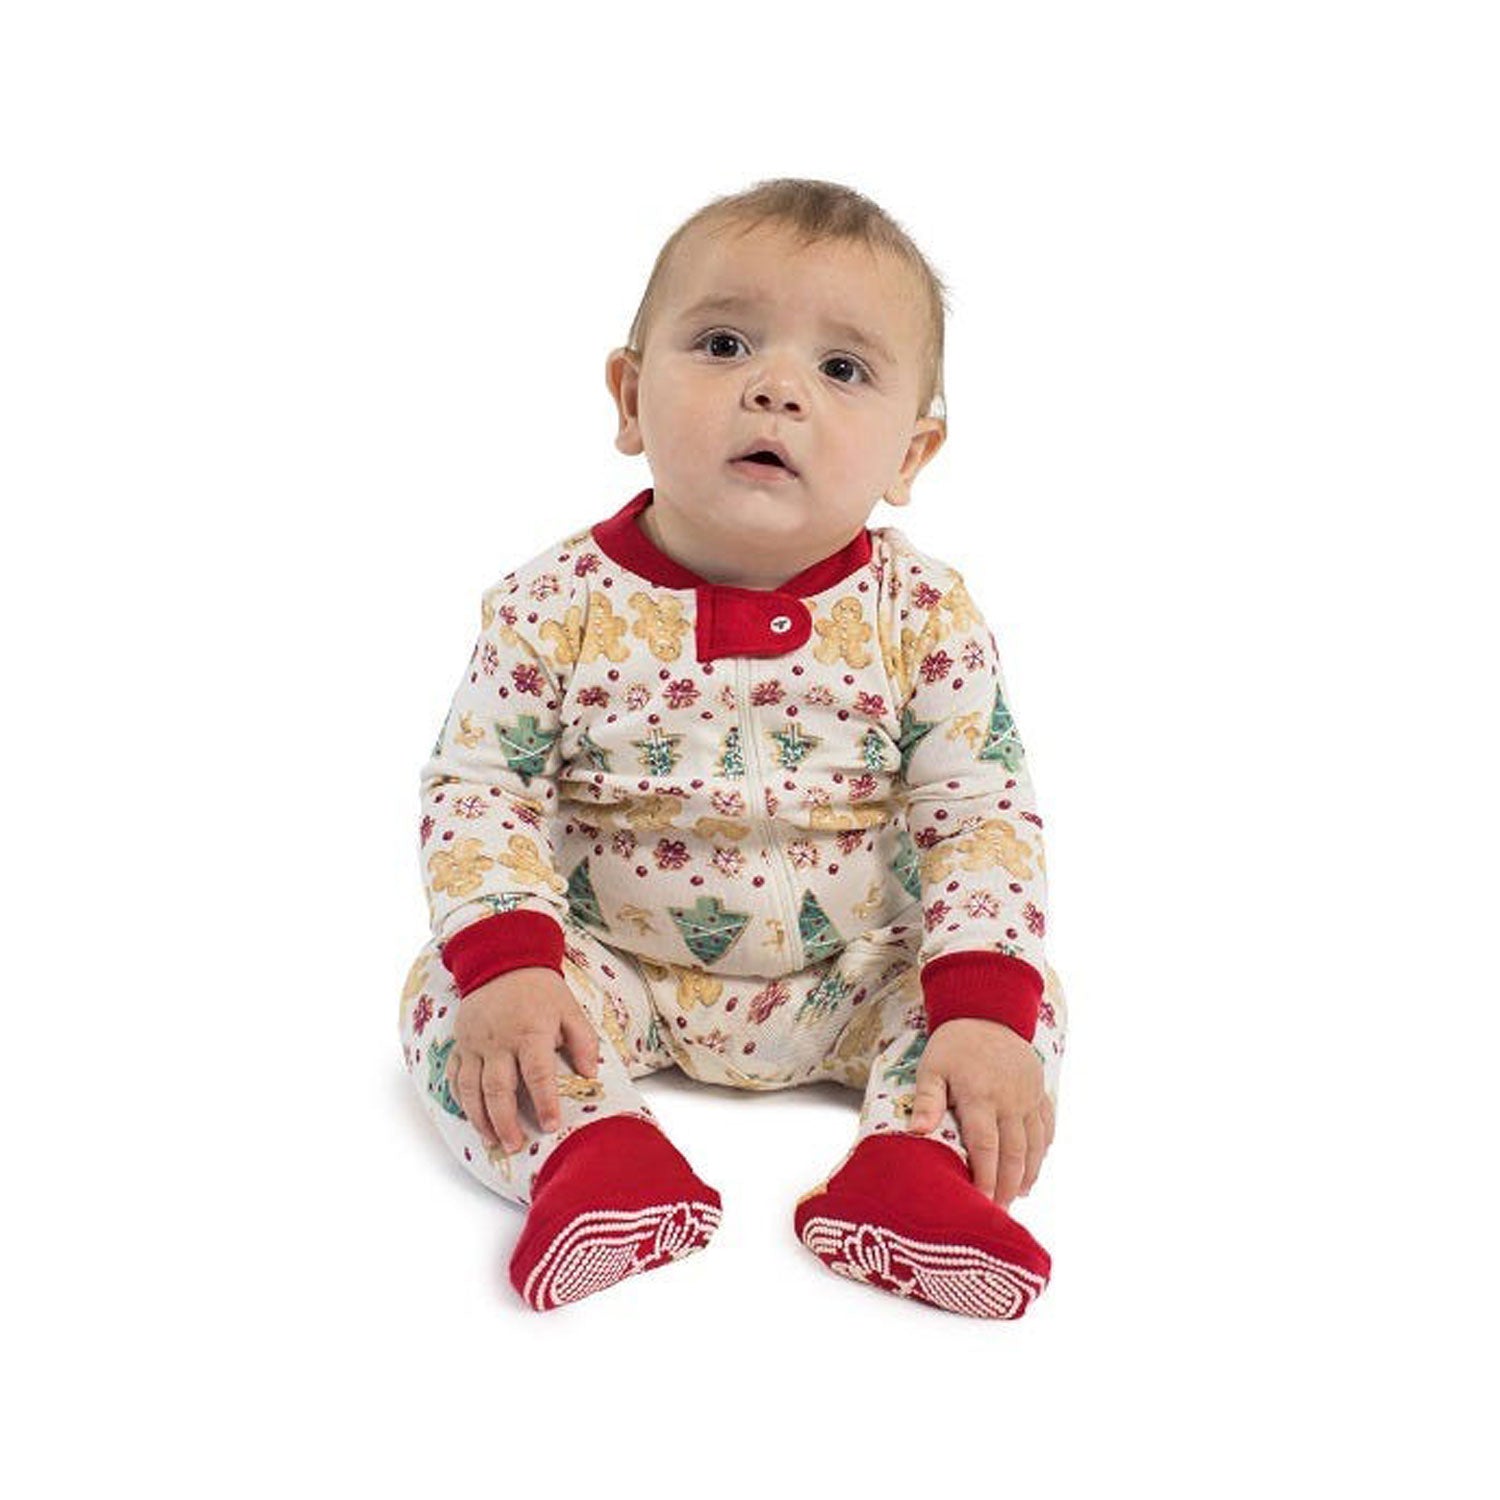 Baby wearing Burt's Bees Organic Cotton Sleeper - Gingerbread Fair Isle - Cardinal